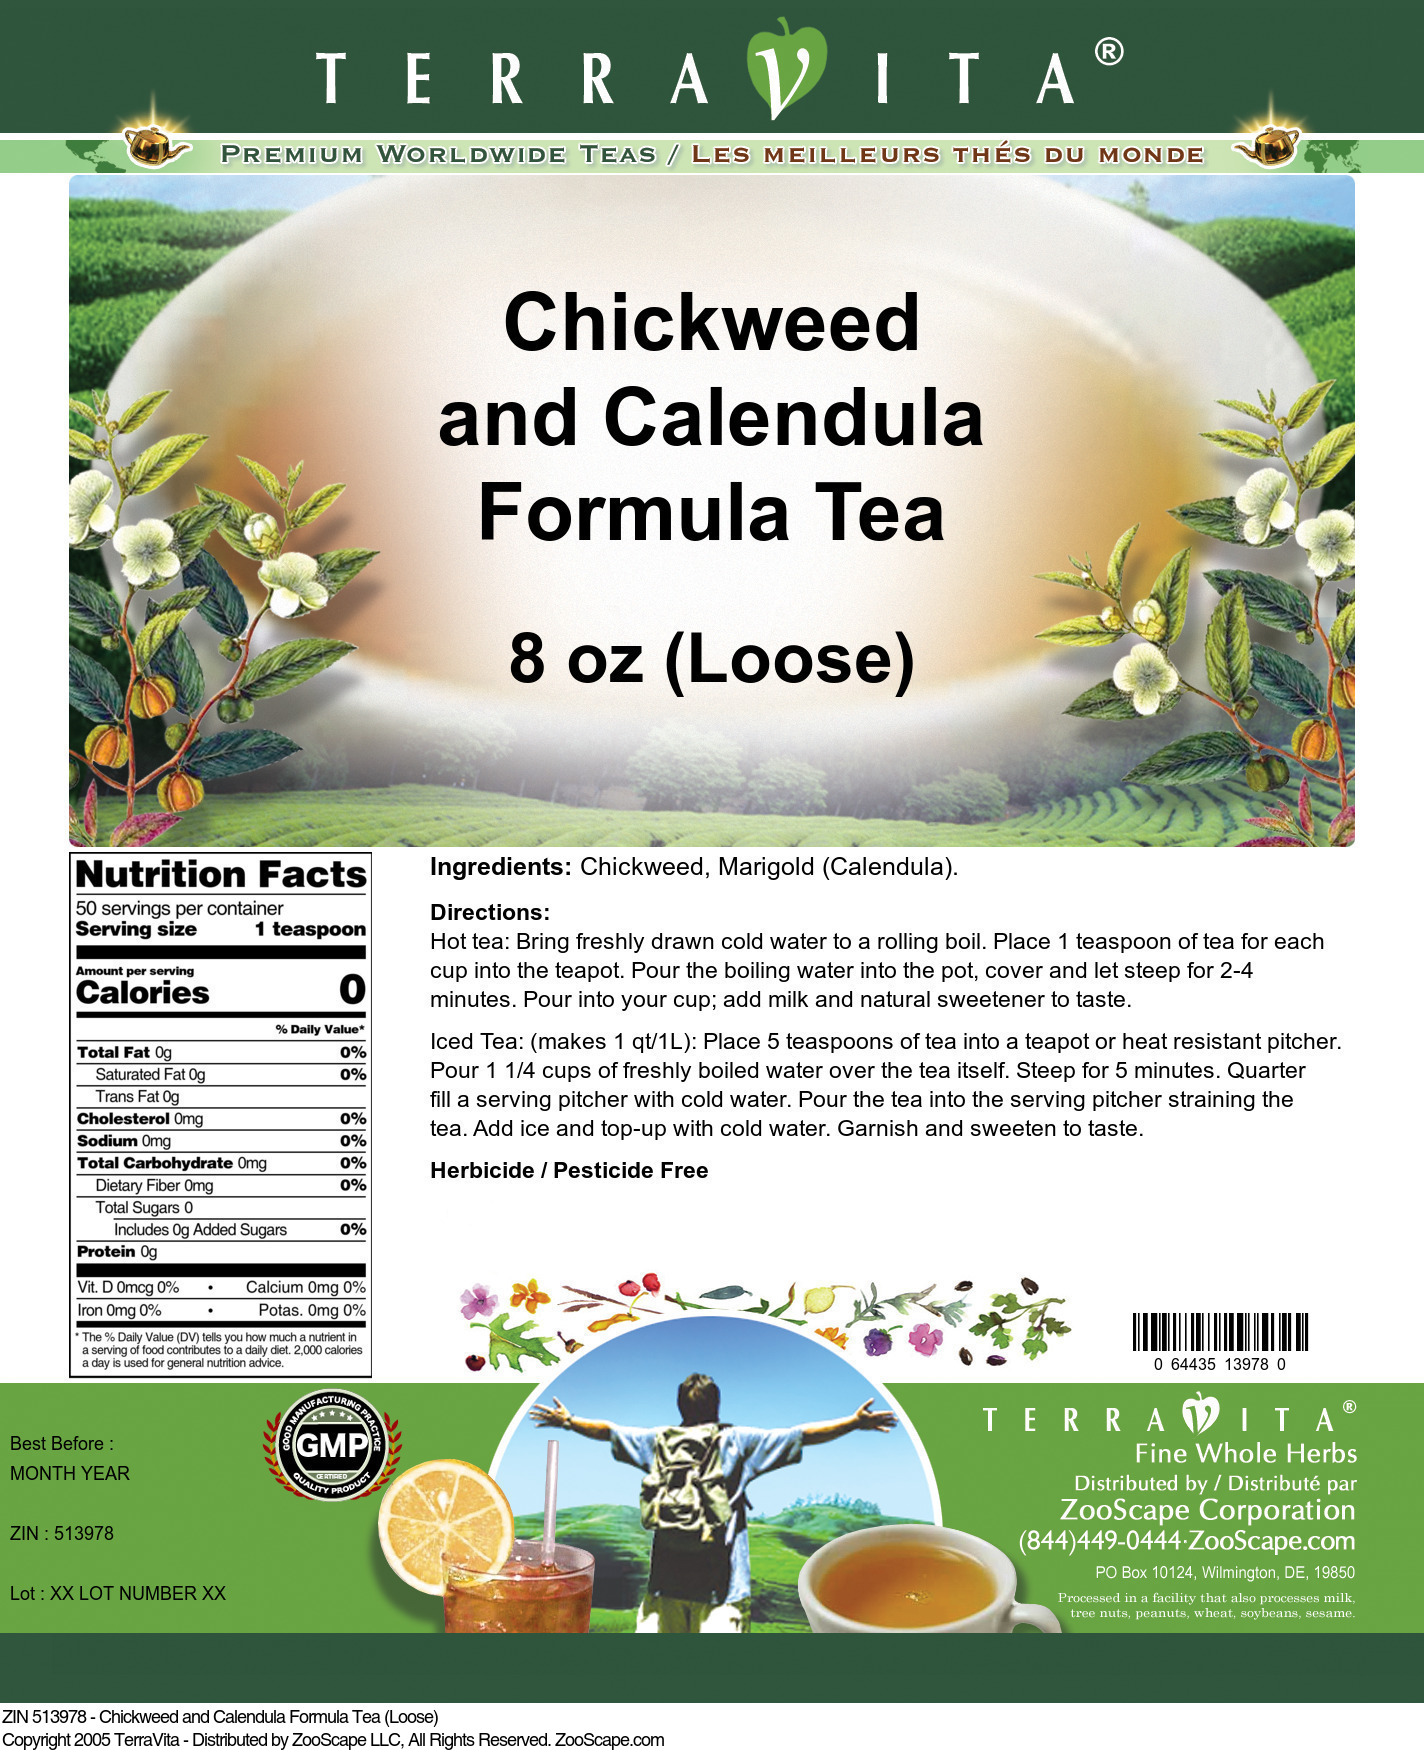 Chickweed and Calendula Formula Tea (Loose) - Label